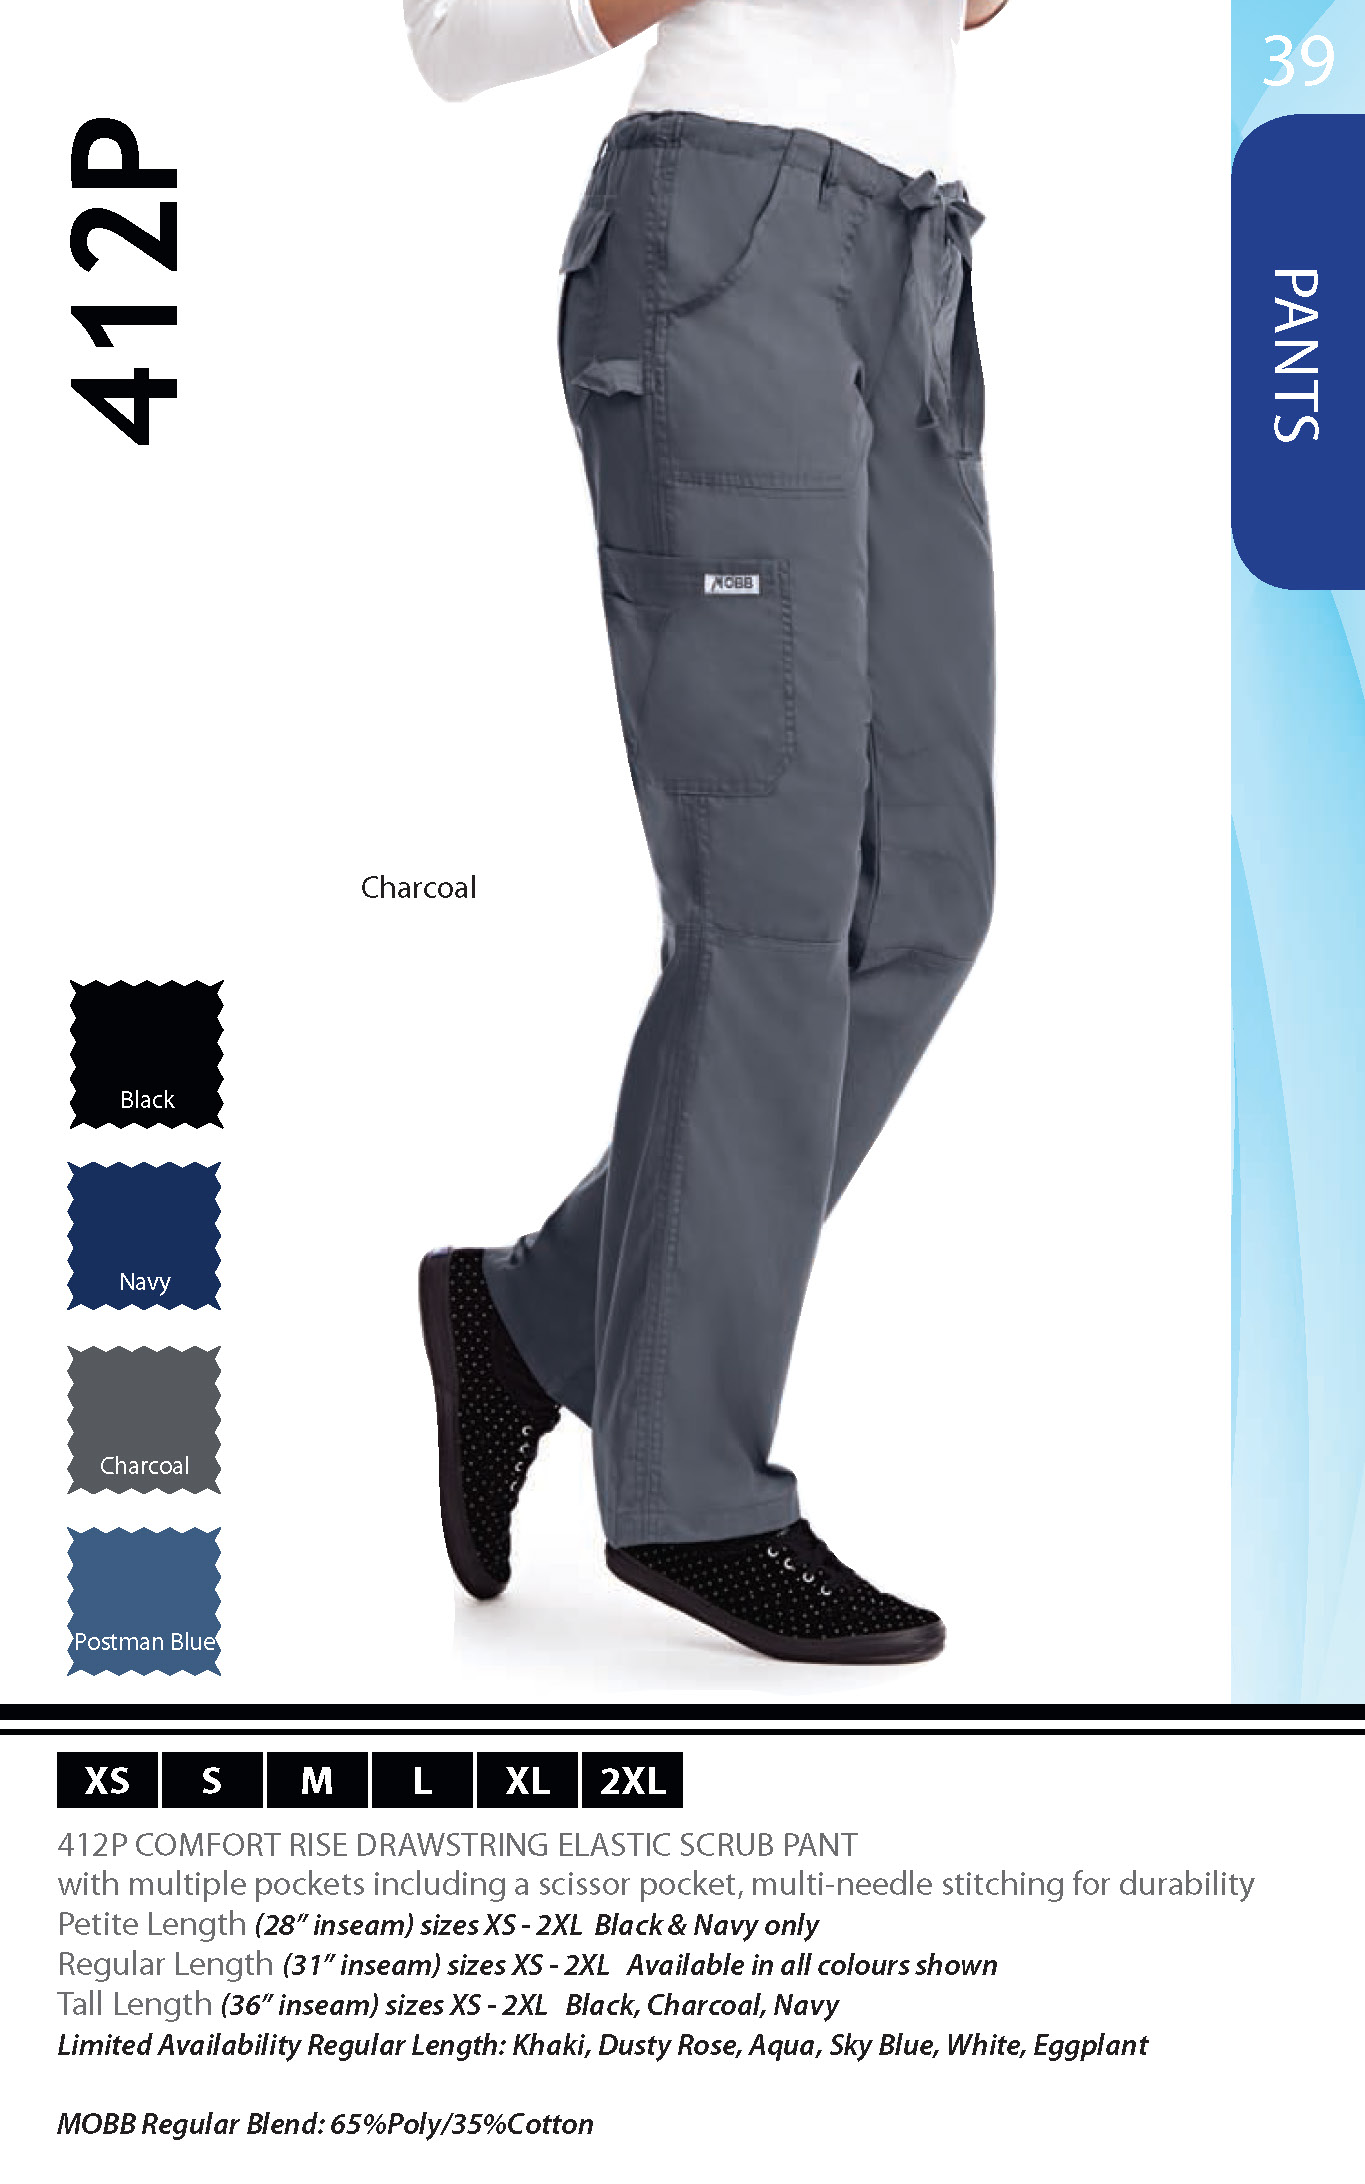 Comfort rise drawstring elastic scrub pant – 412P - Express Uniforms